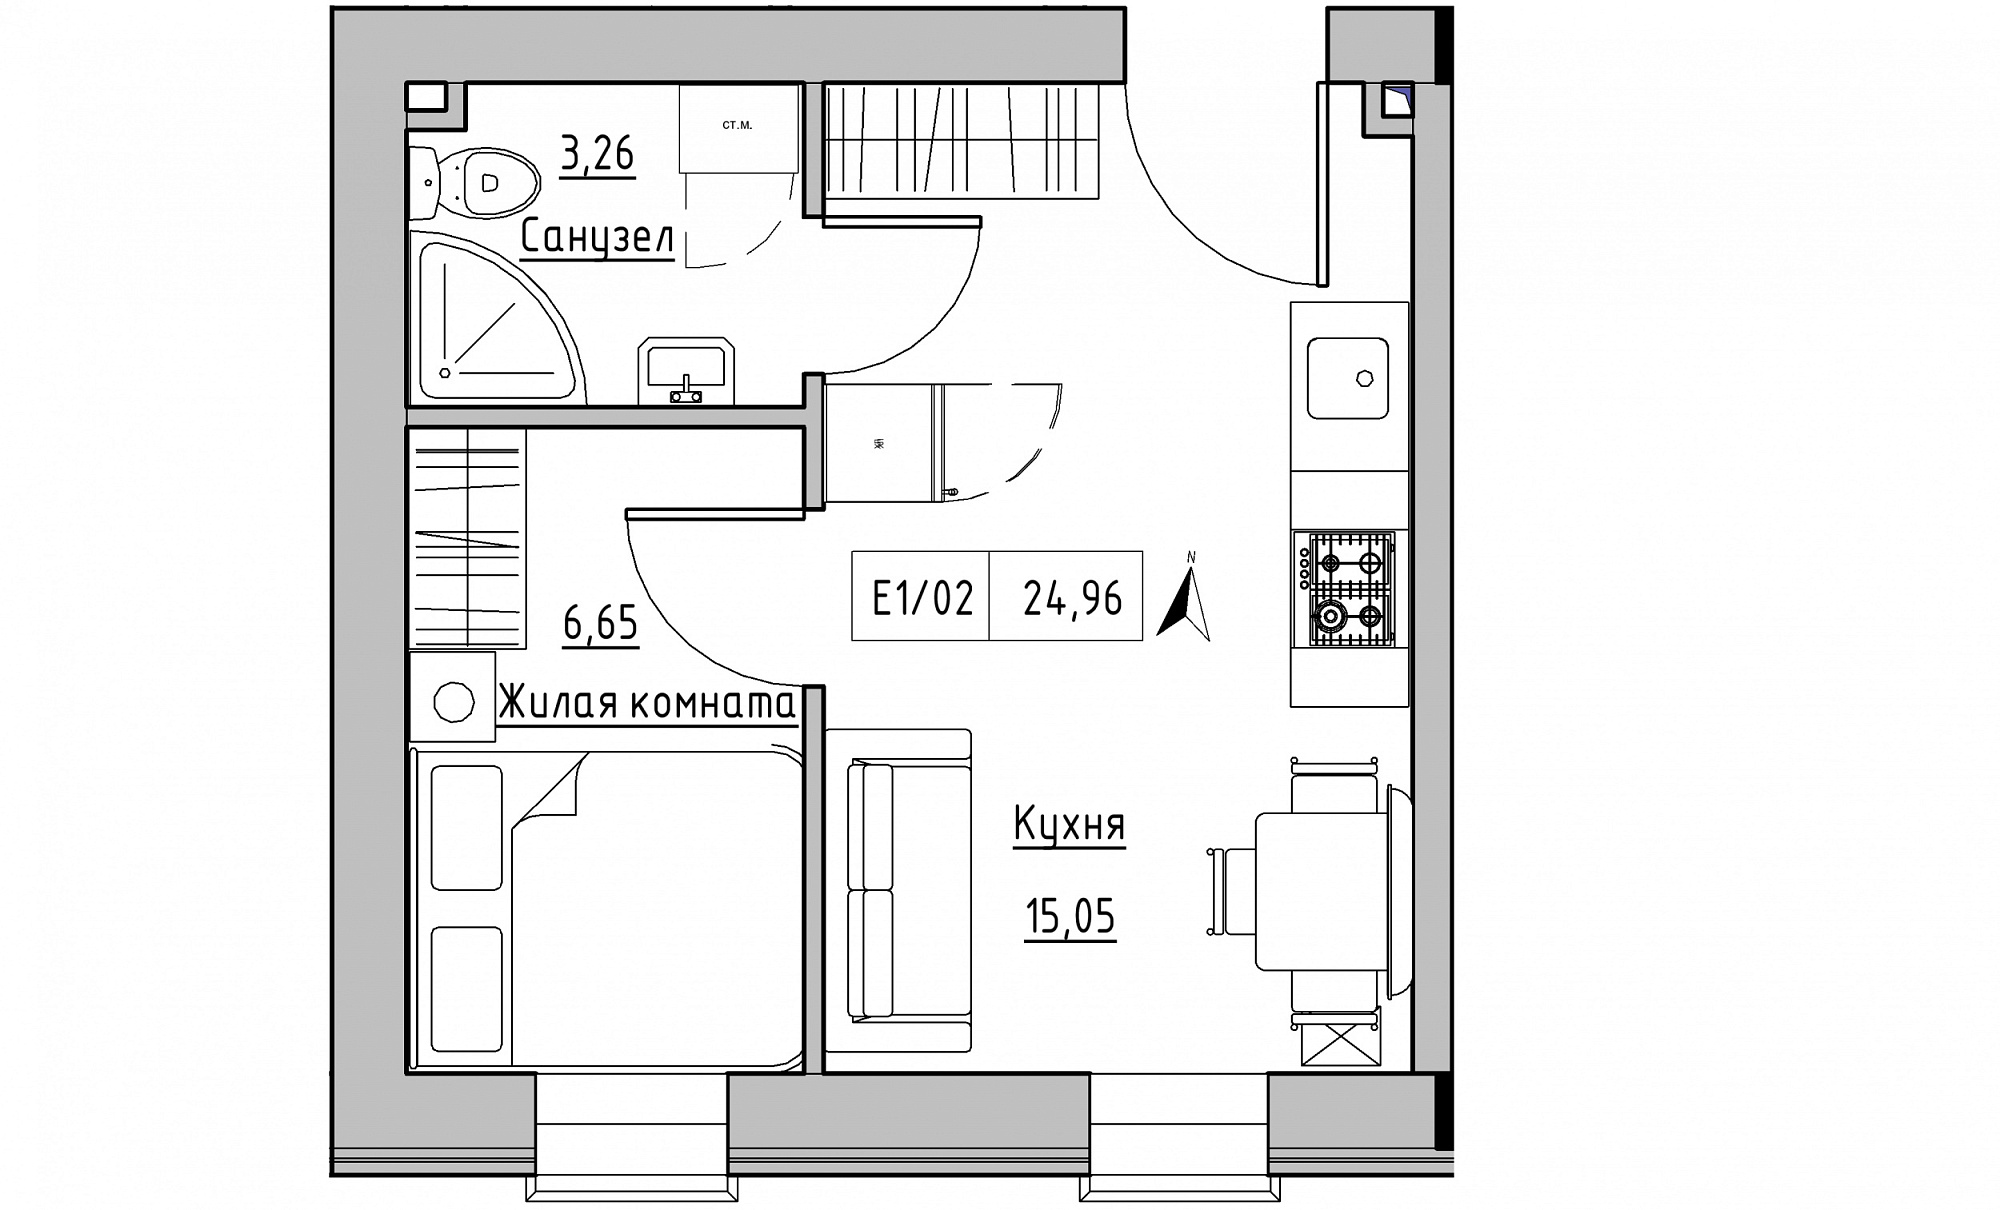 Planning 1-rm flats area 24.96m2, KS-015-04/0012.